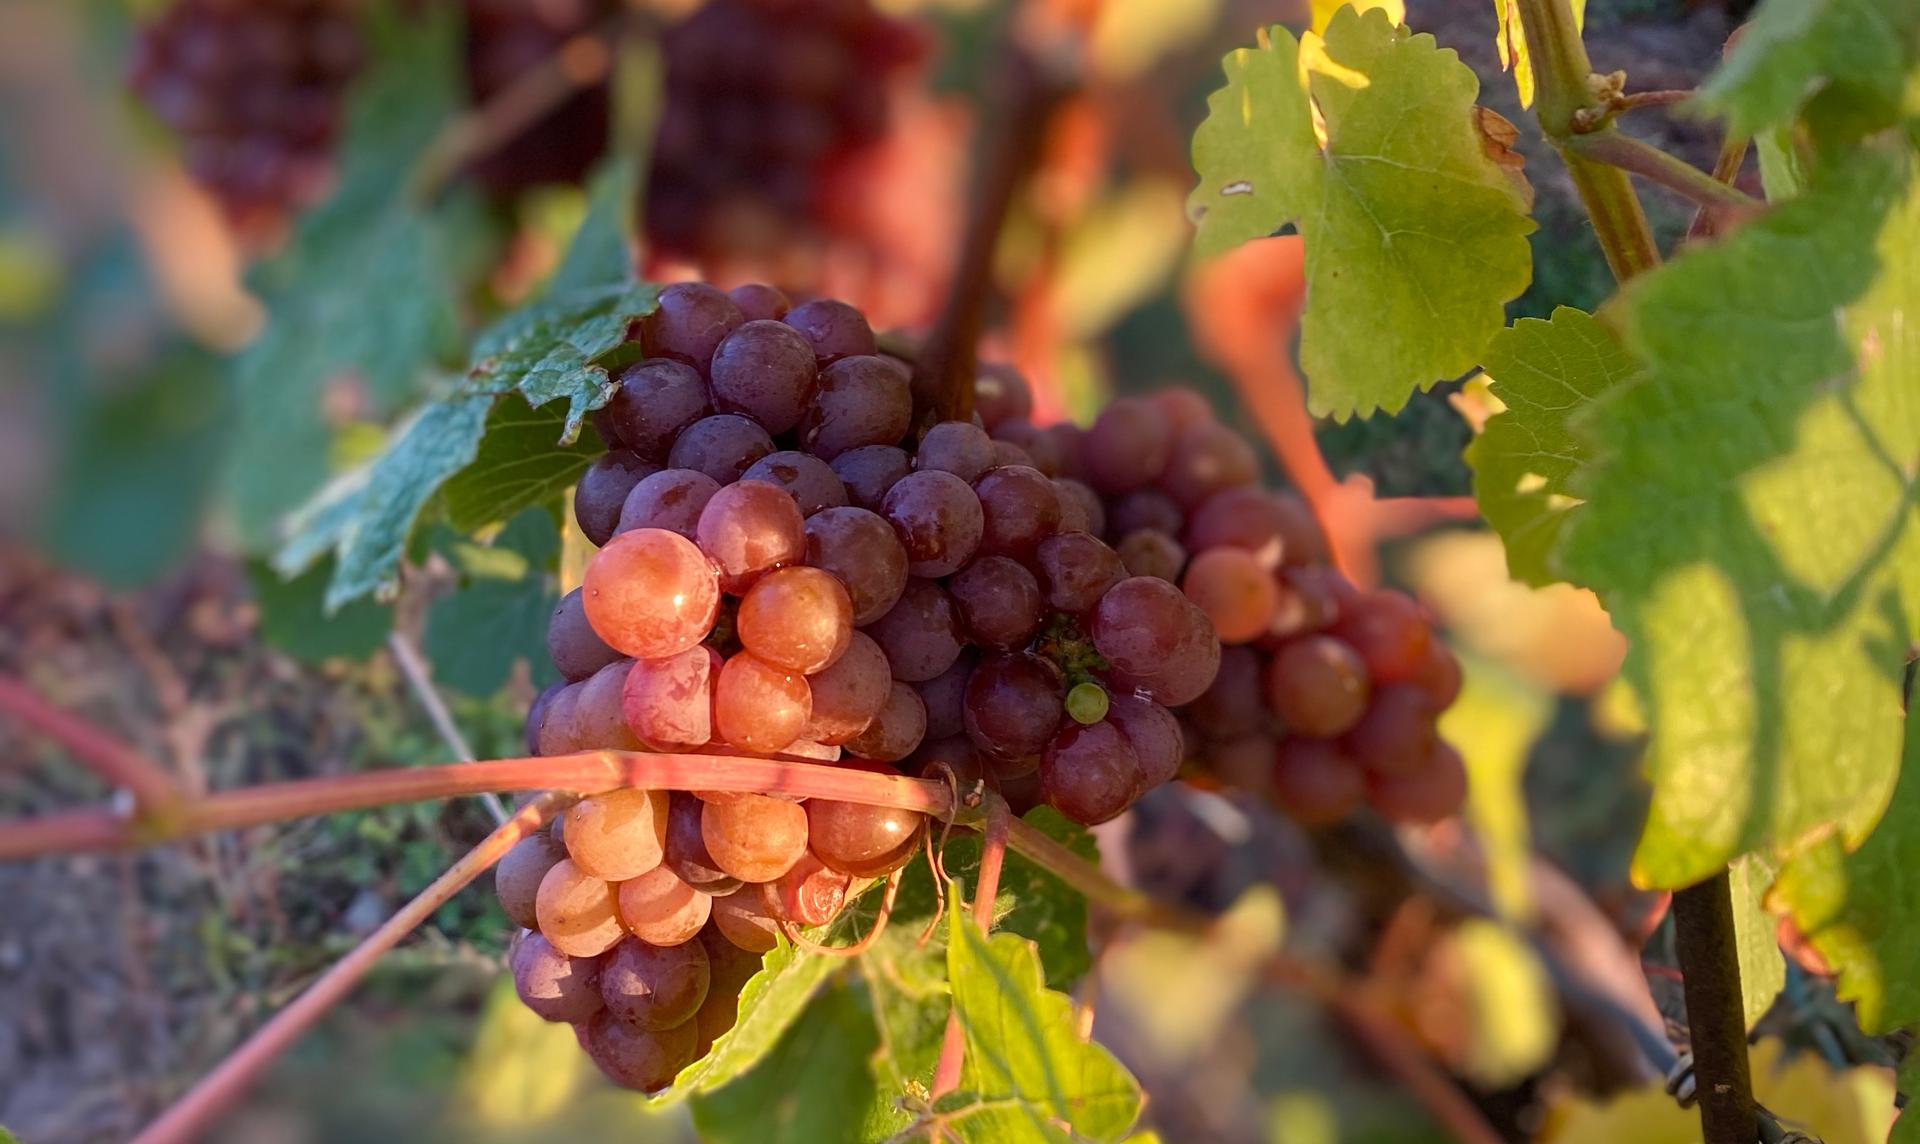 Grapes on the vine at the award-winning Strewn Vineyard